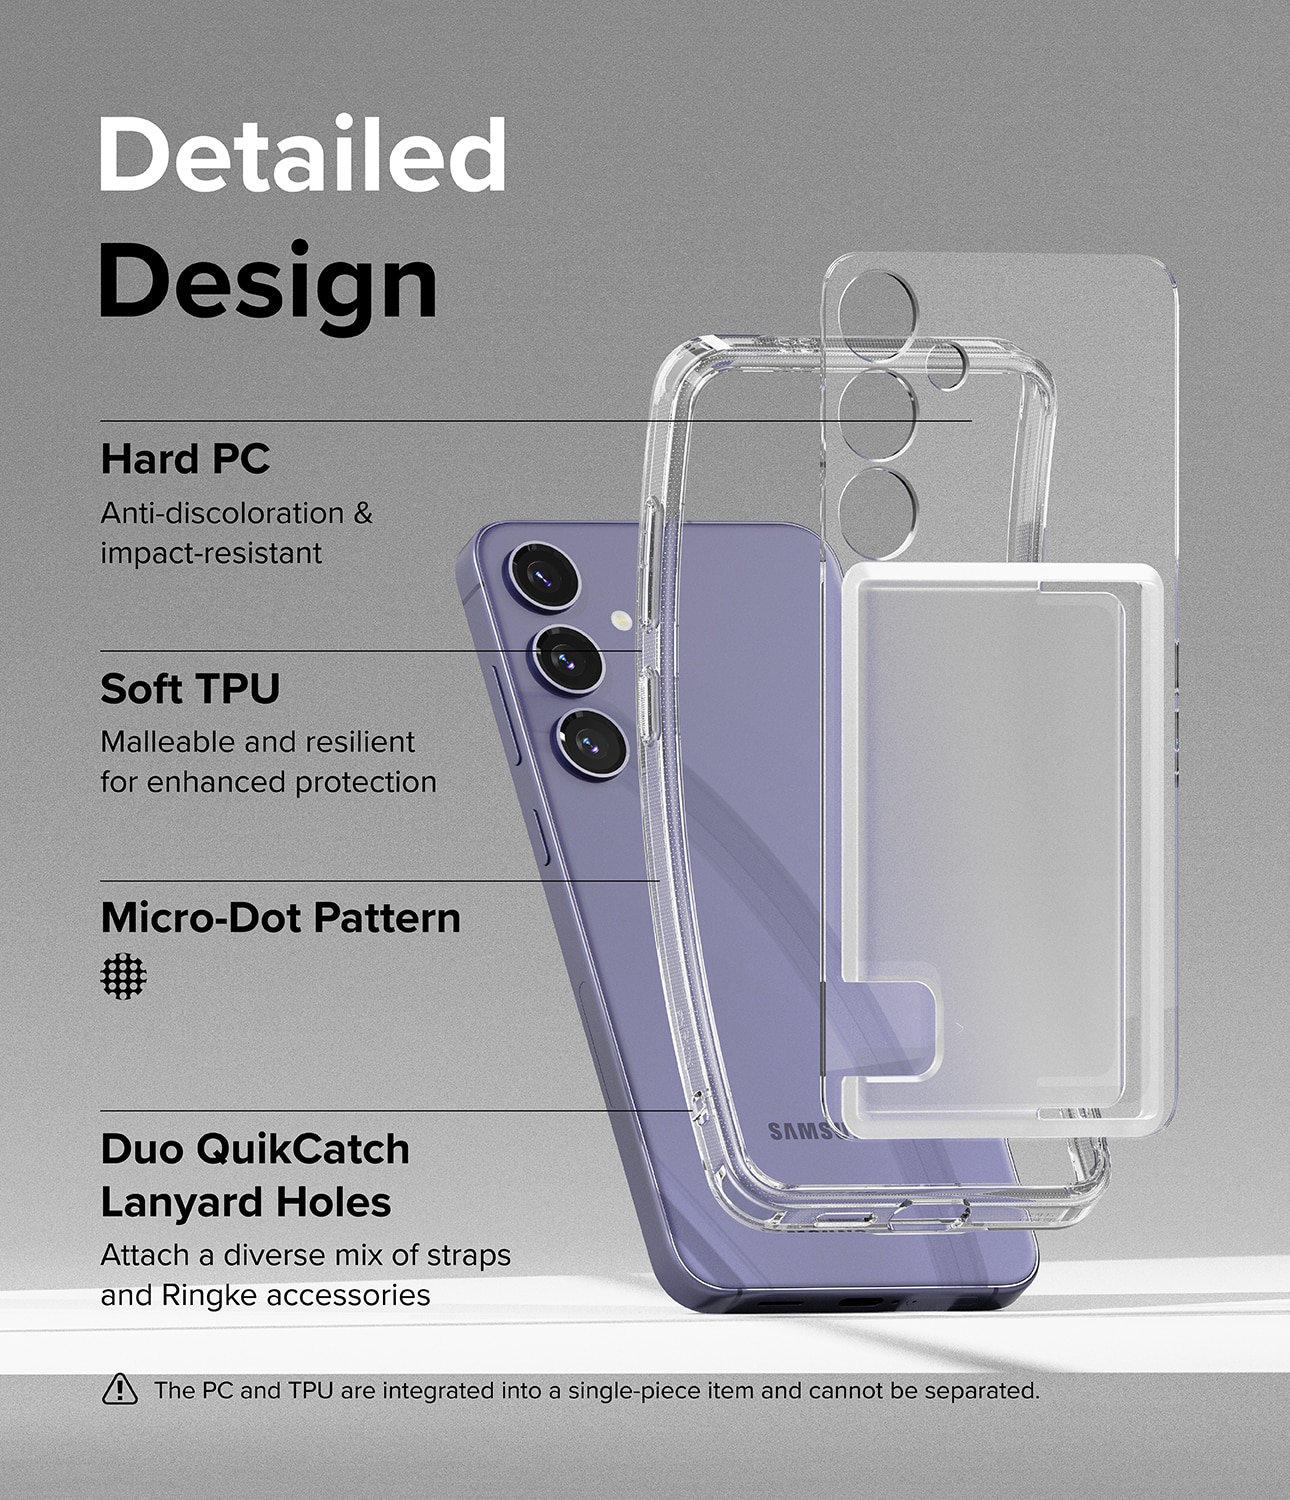 Fusion Card Case Samsung Galaxy S24 Clear